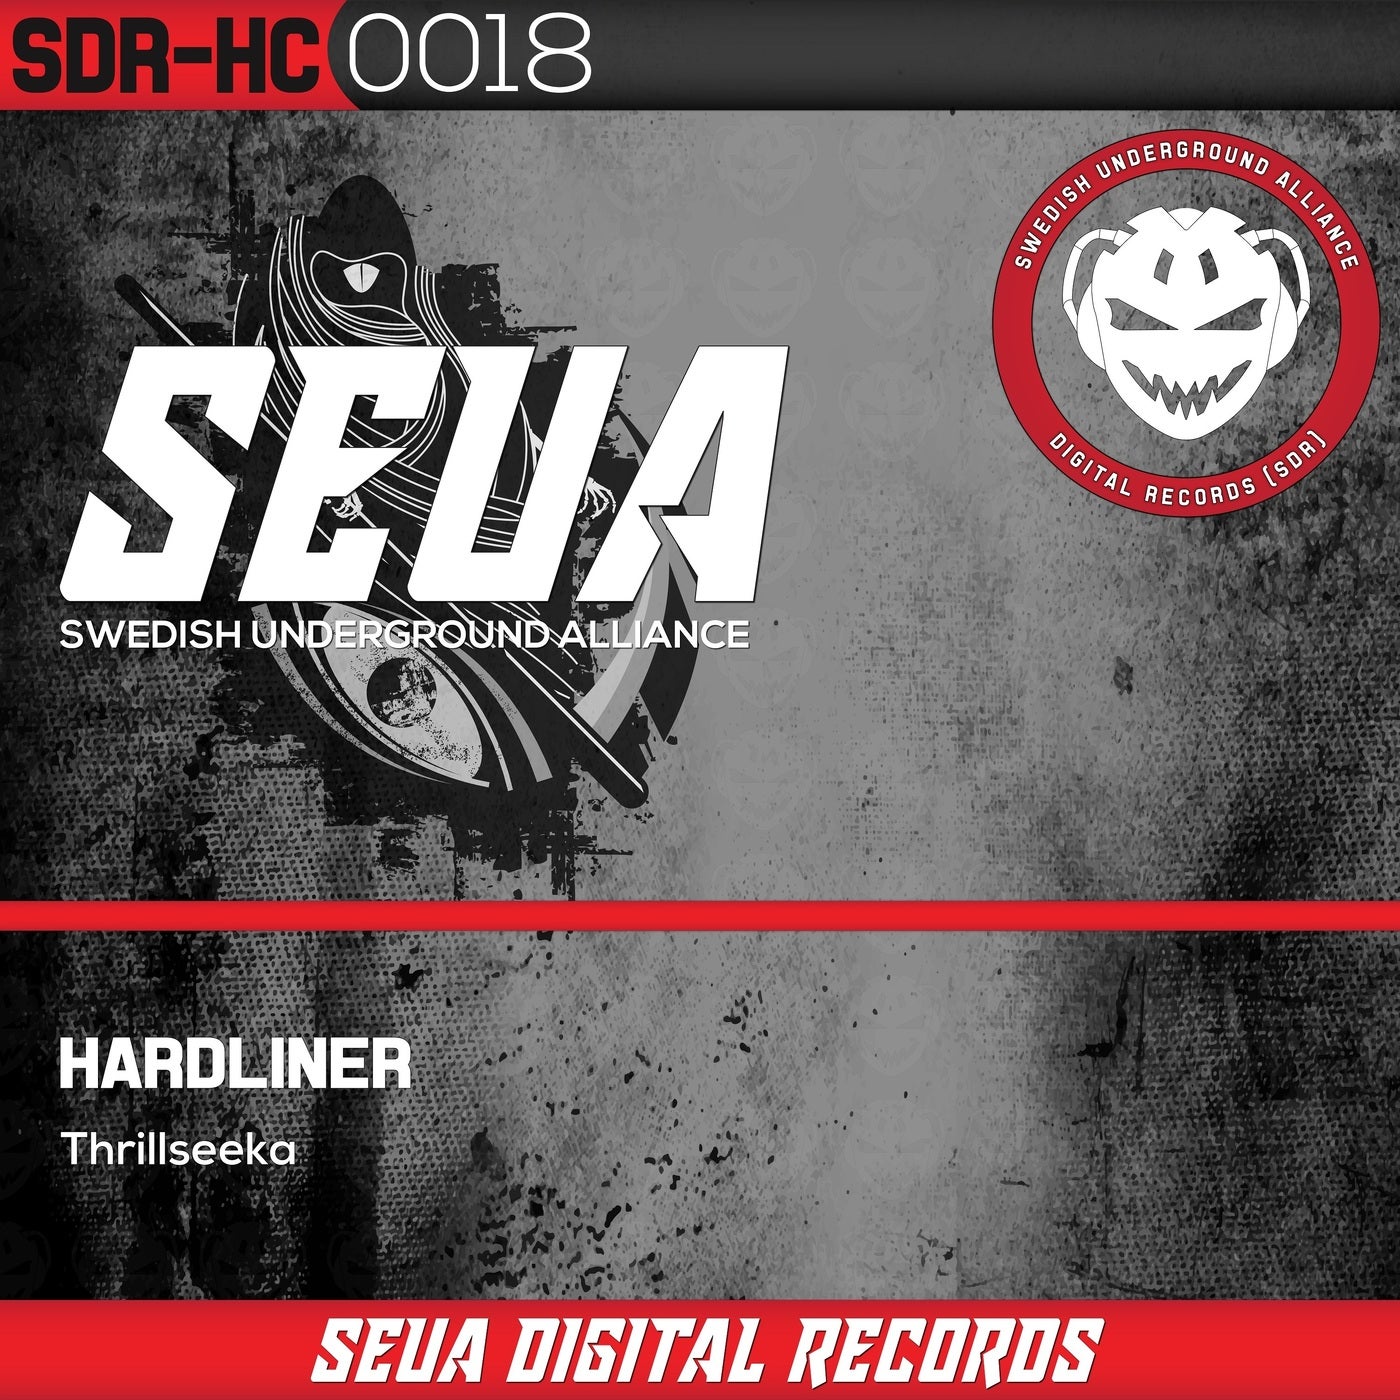 Hardliner - Thrillseeka [SEUA Digital Records]